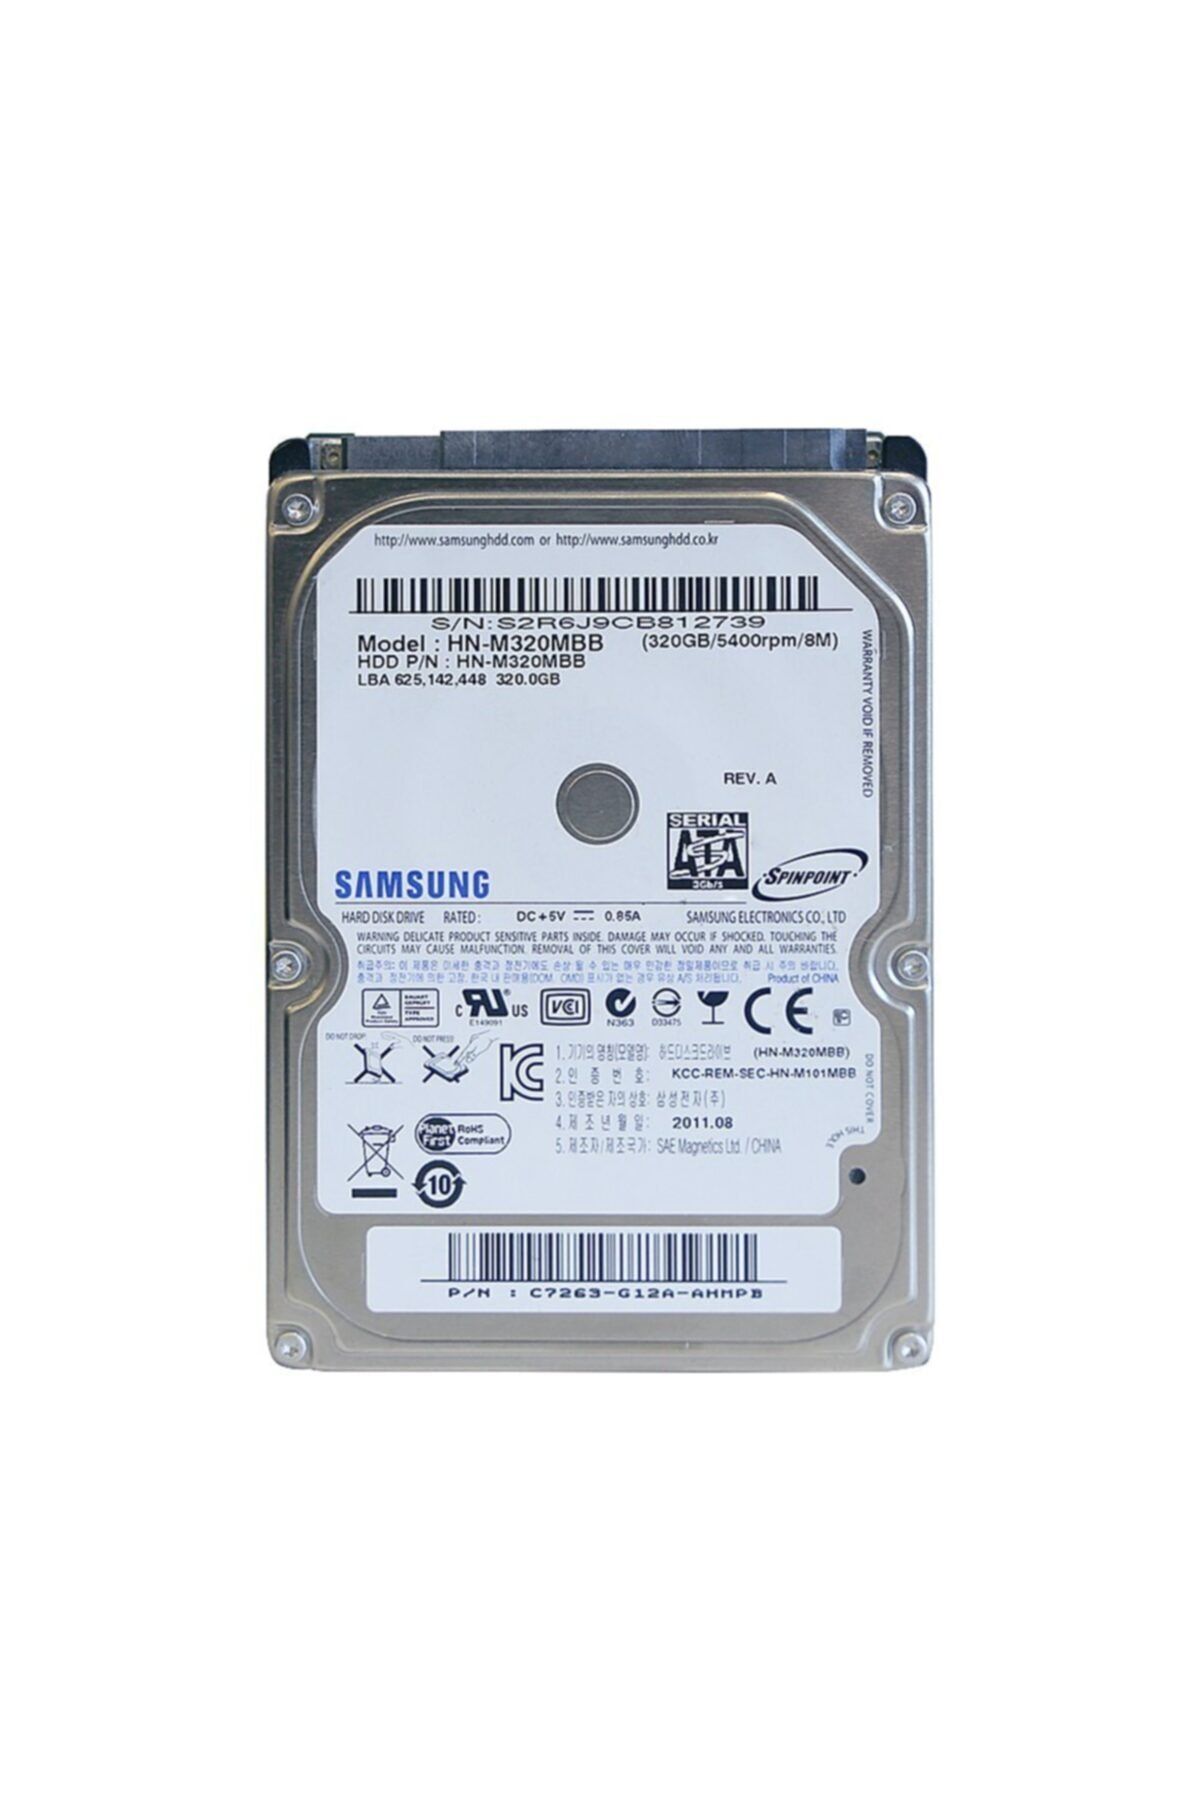 Samsung Hn-m320mbb Sata3 5400rpm 8mb 2.5'' 320gb Notebook Hdd(refurbished)